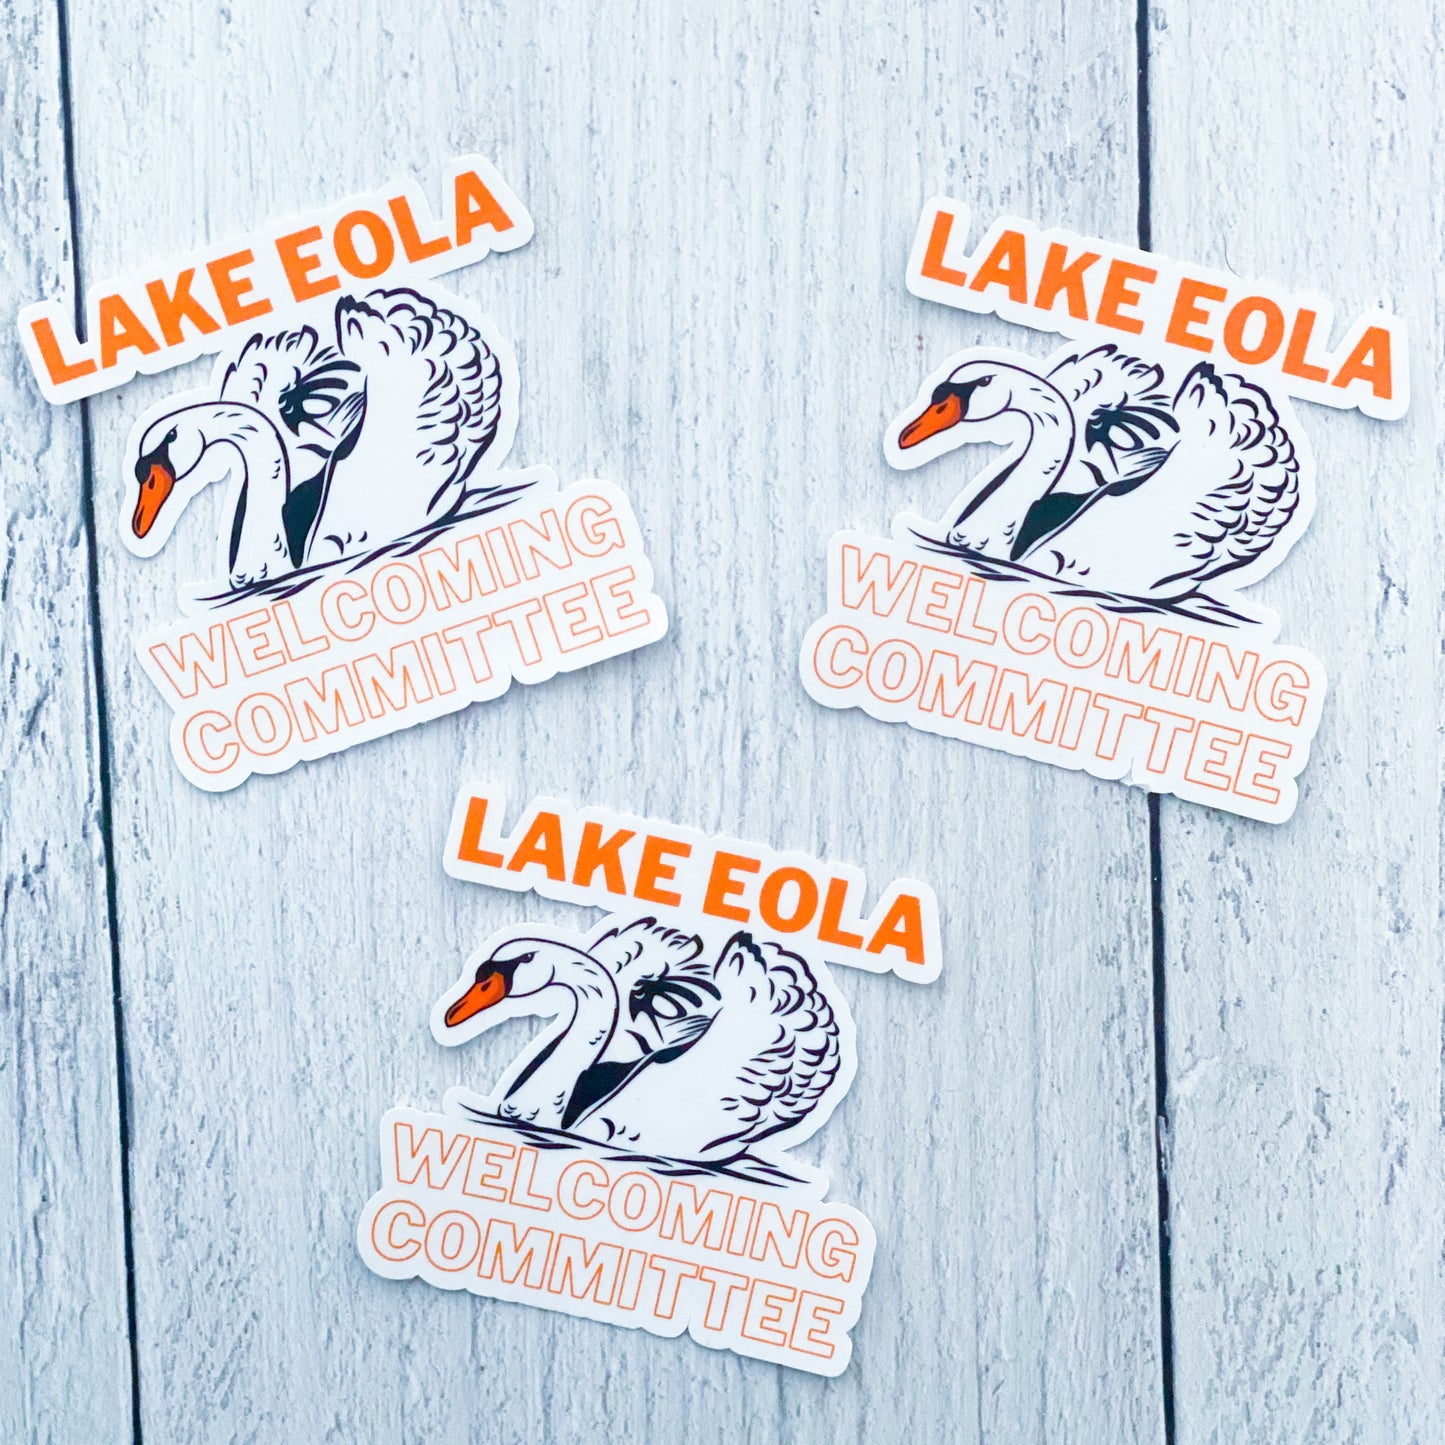 Lake Eola Welcoming Committee